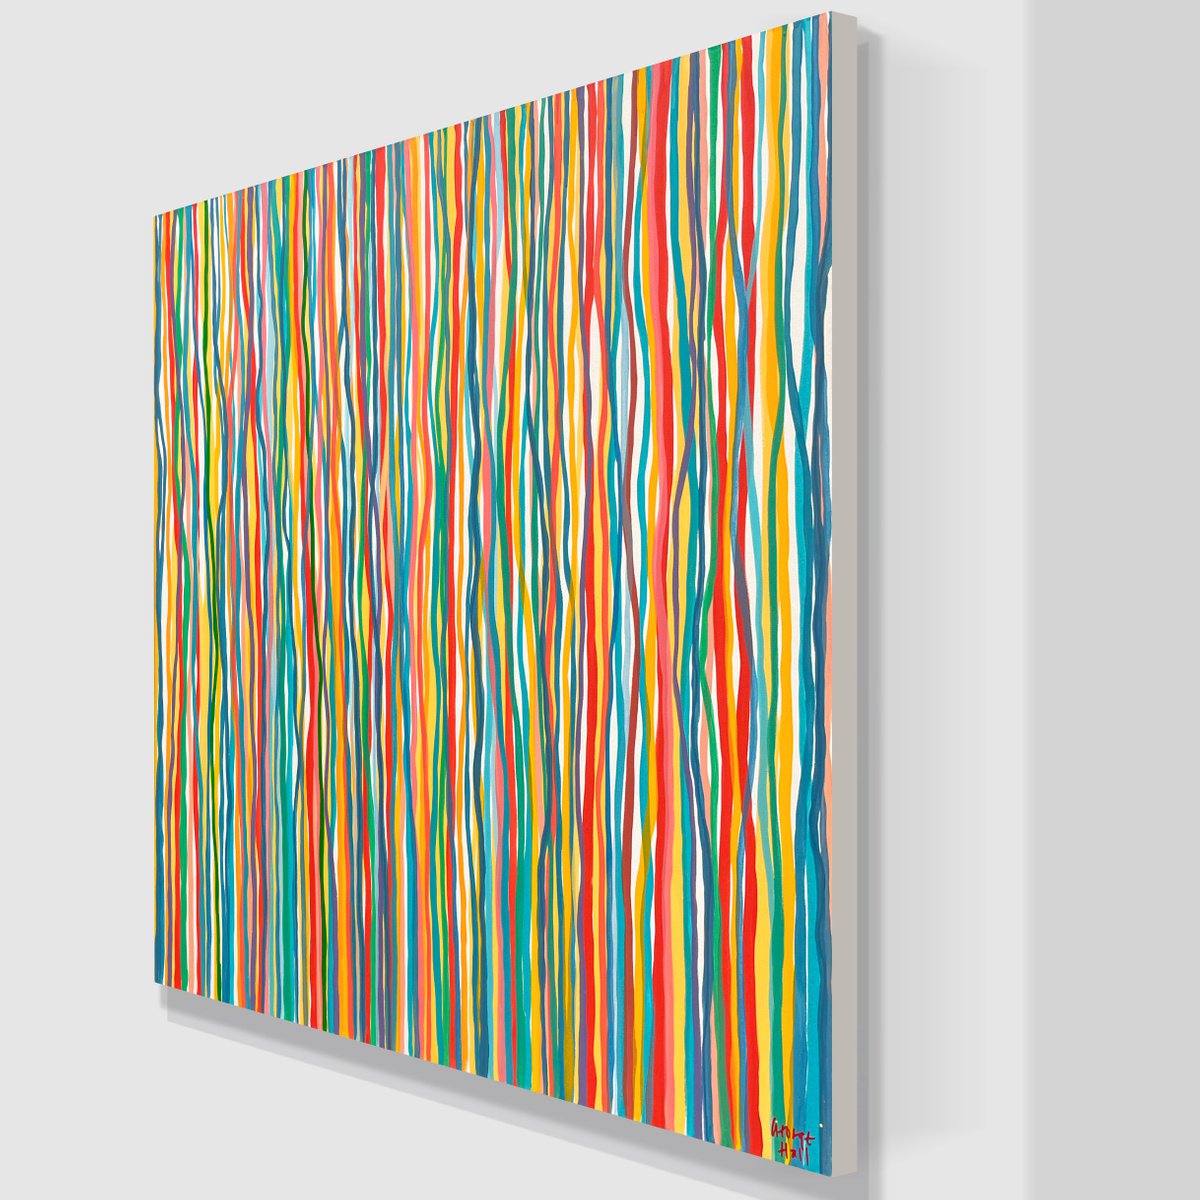 Free Funk - 117 x 117cm acrylic on canvas by George Hall